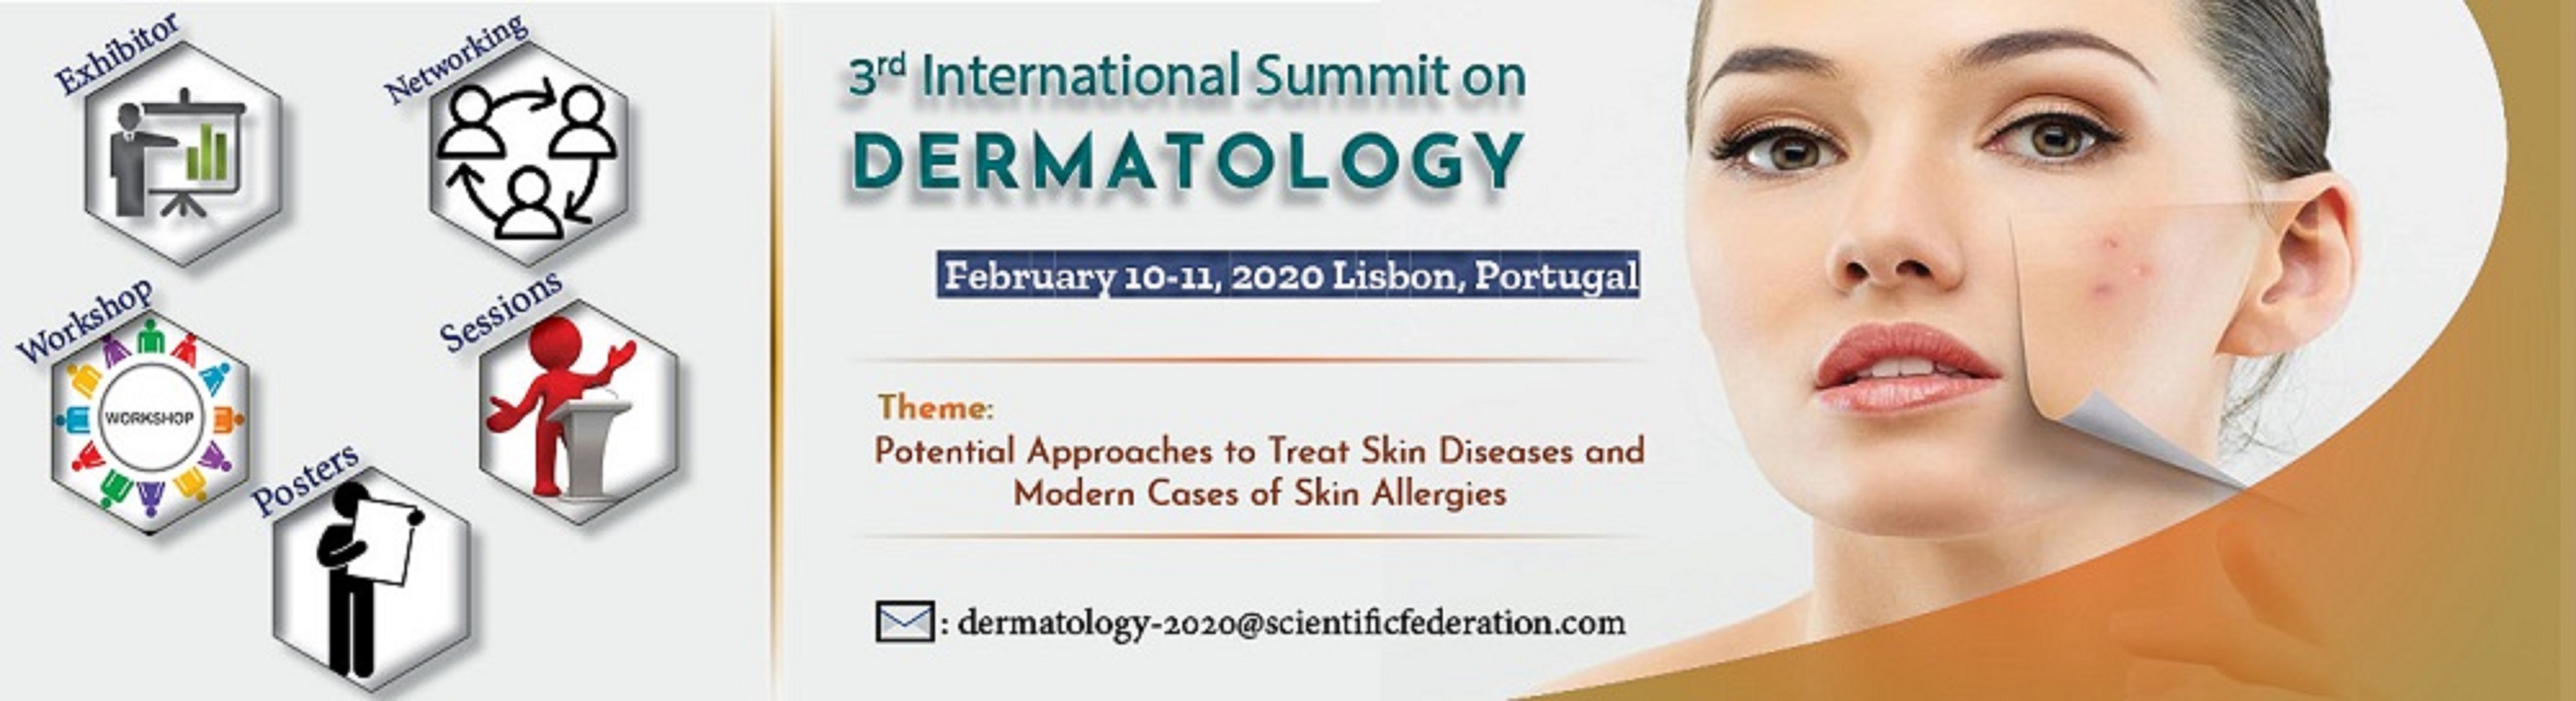 3rd International Summit on Dermatology